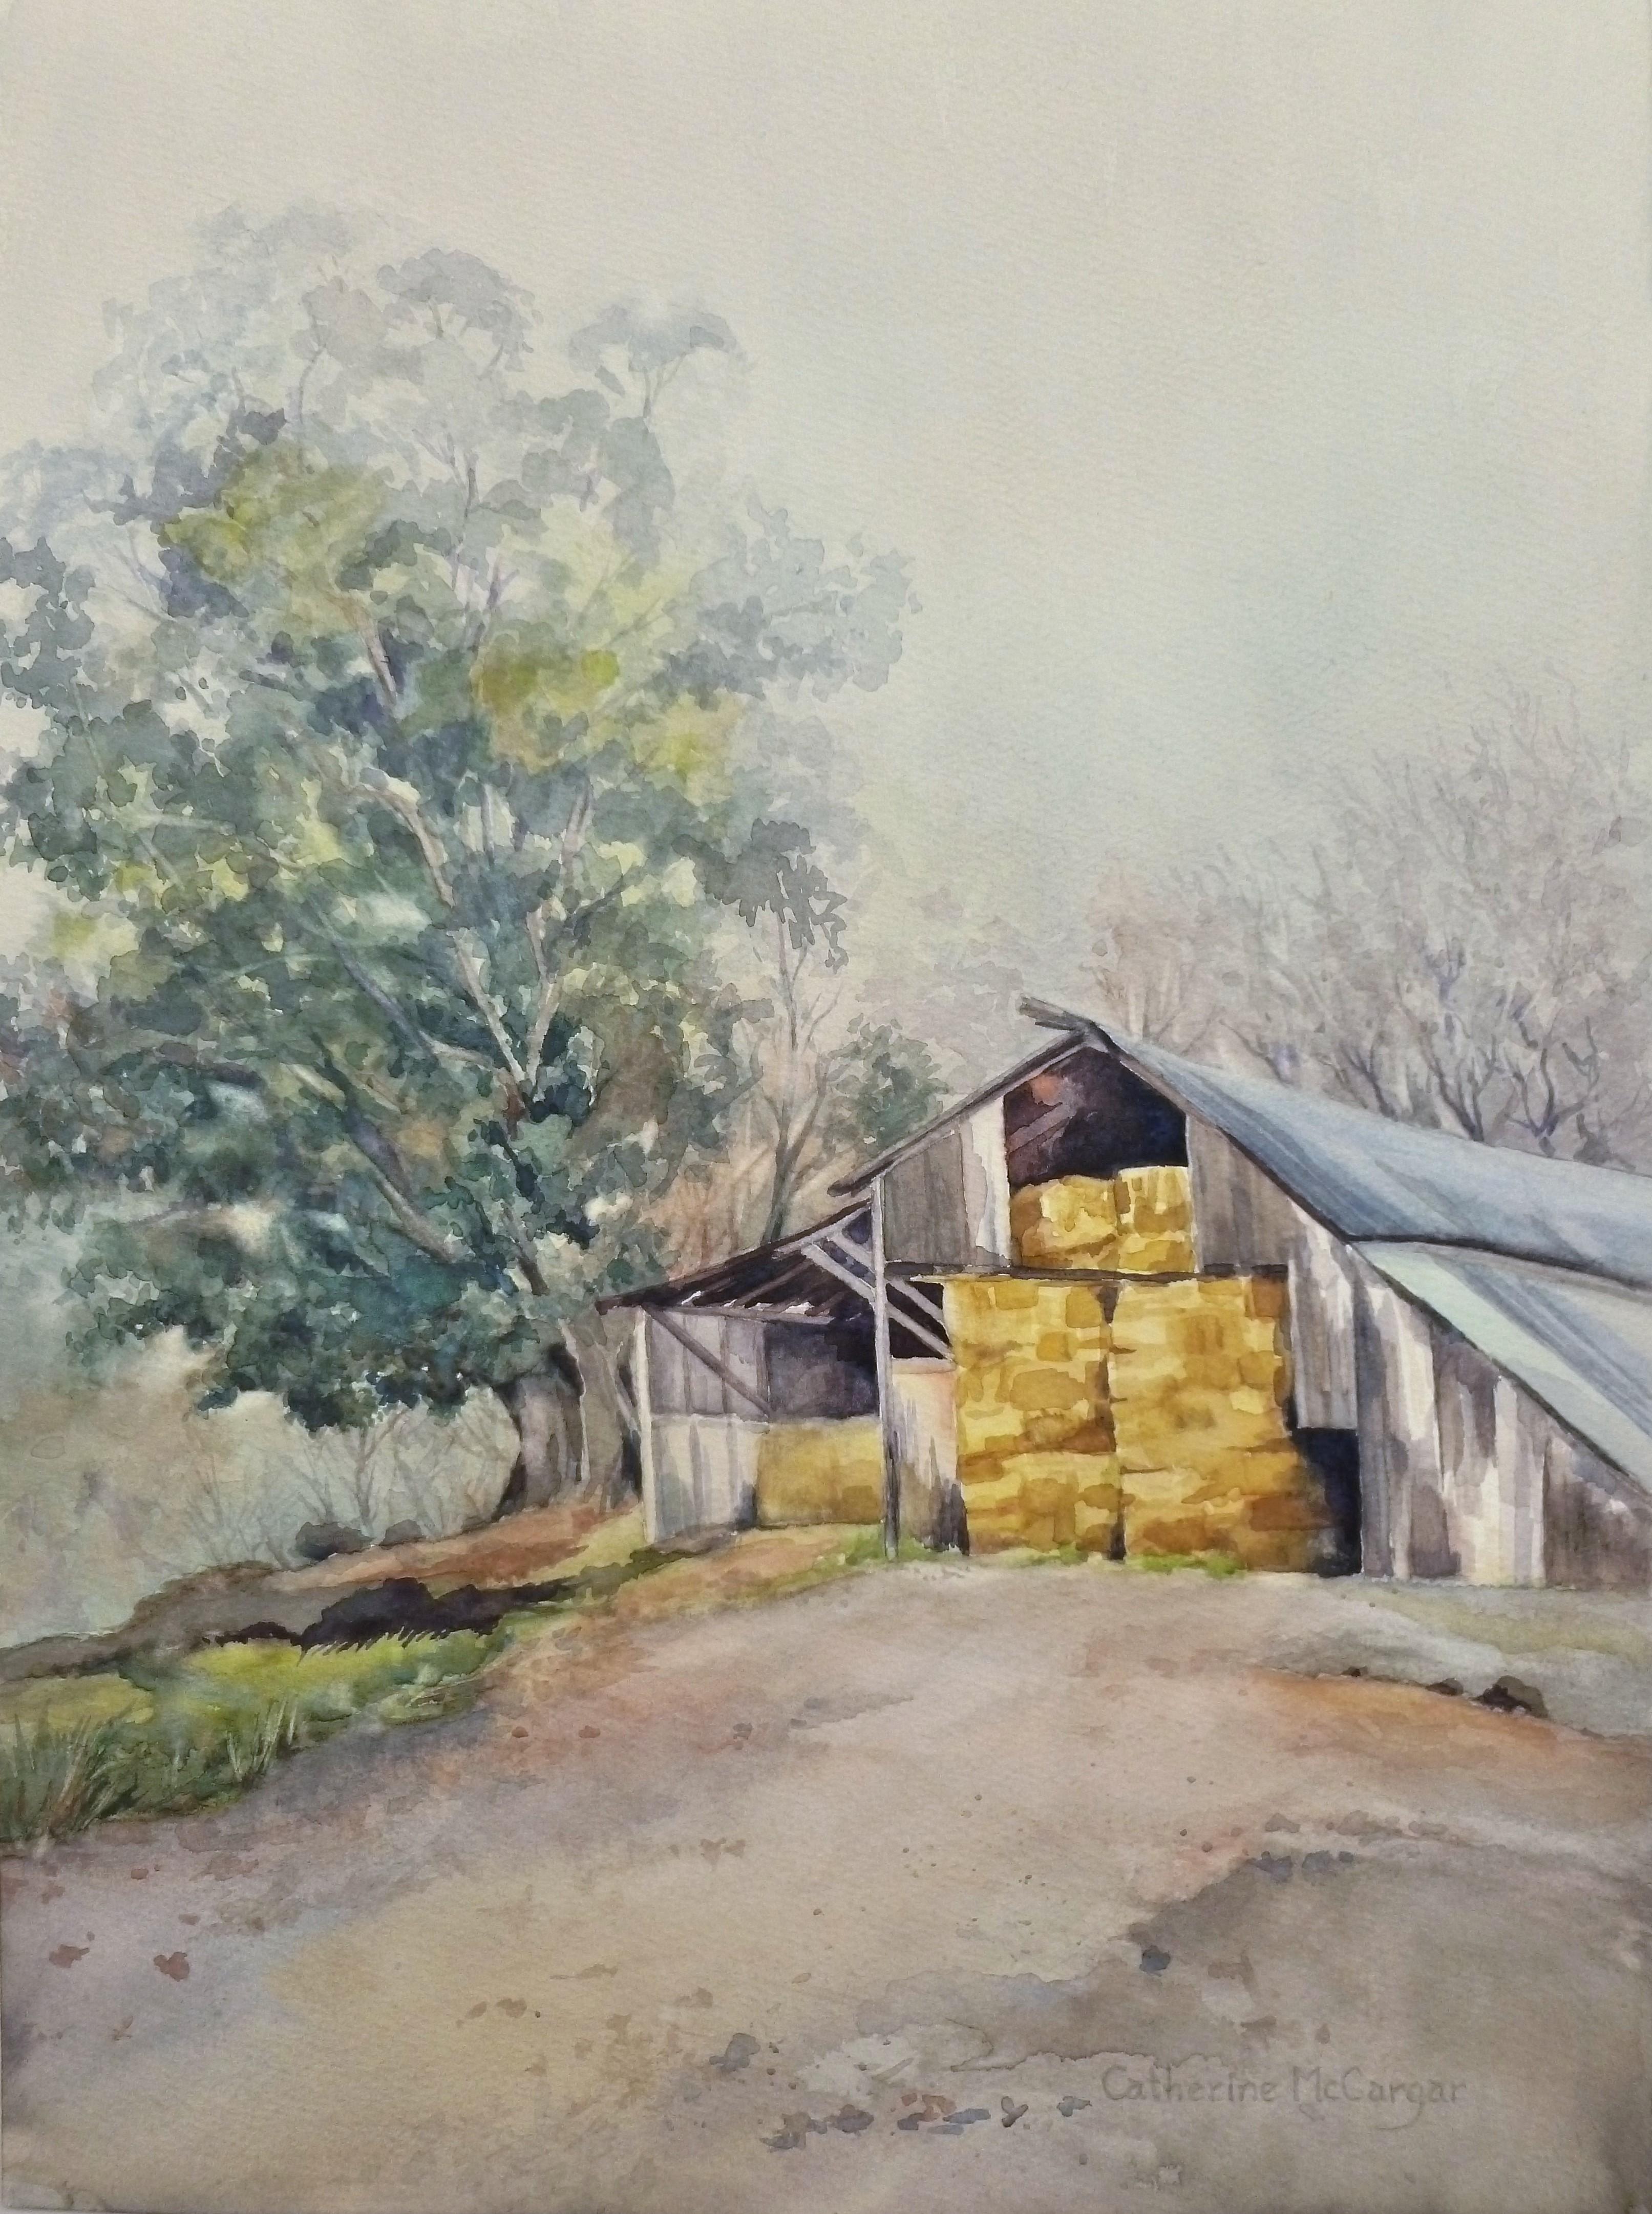 Catherine McCargar Interior Art - Misty Morning on the Farm, Original Painting